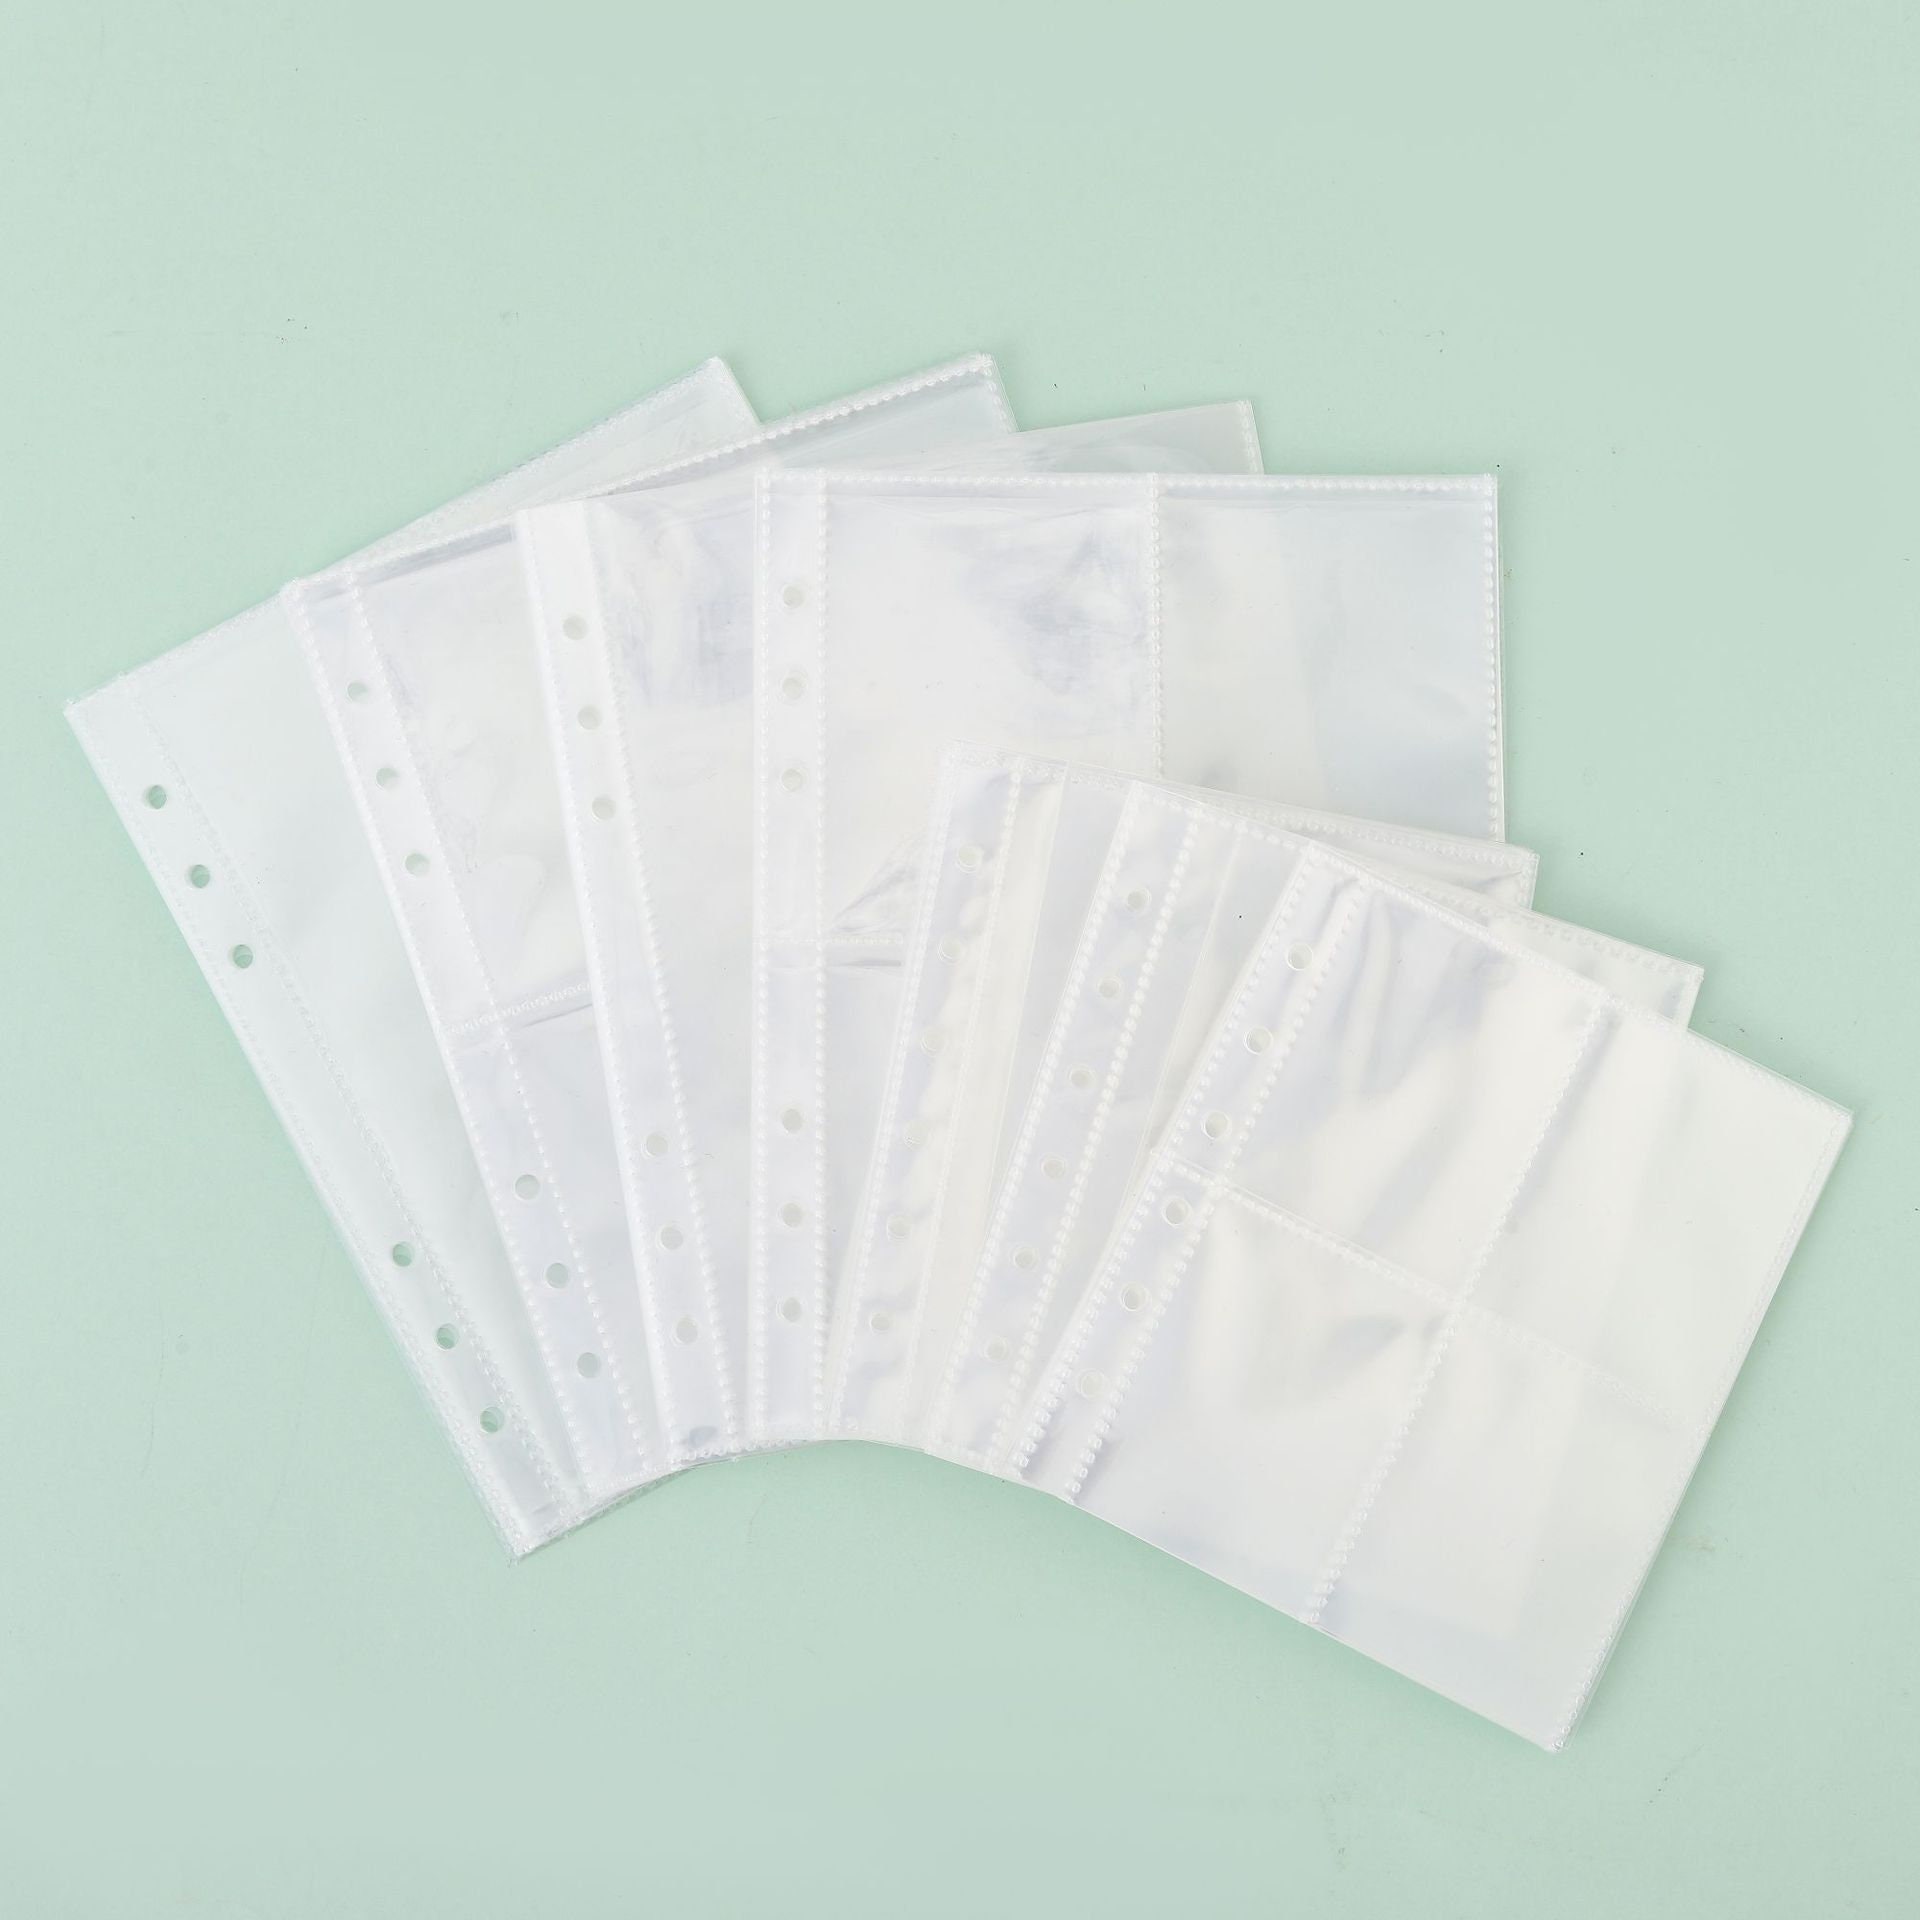  COHEALI 5 Scrapbook Plastic Sleeves Photo Album Supply